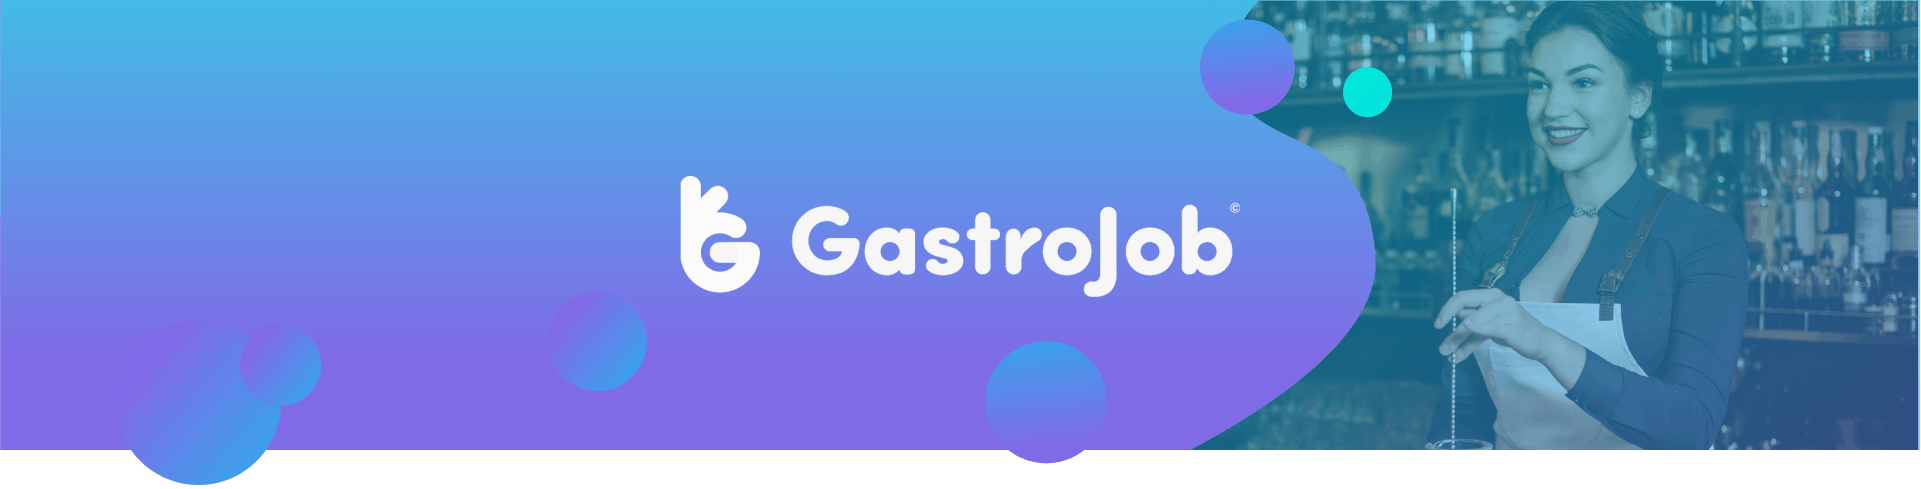 Banner with GastroJob logo